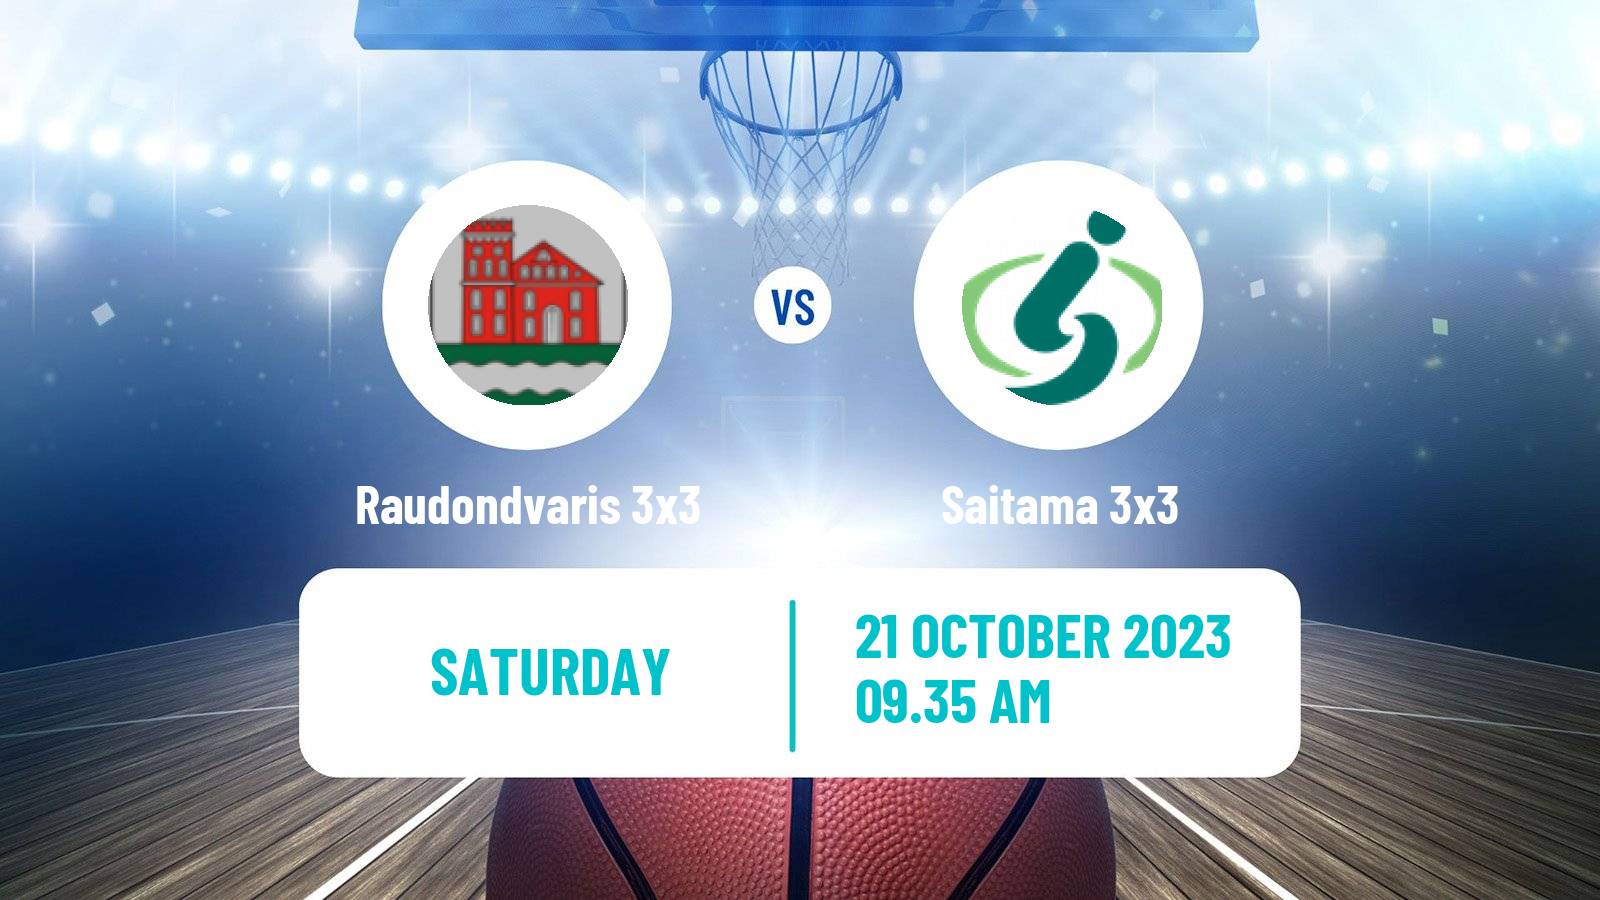 Basketball World Tour Chengdu 3x3 Raudondvaris 3x3 - Saitama 3x3